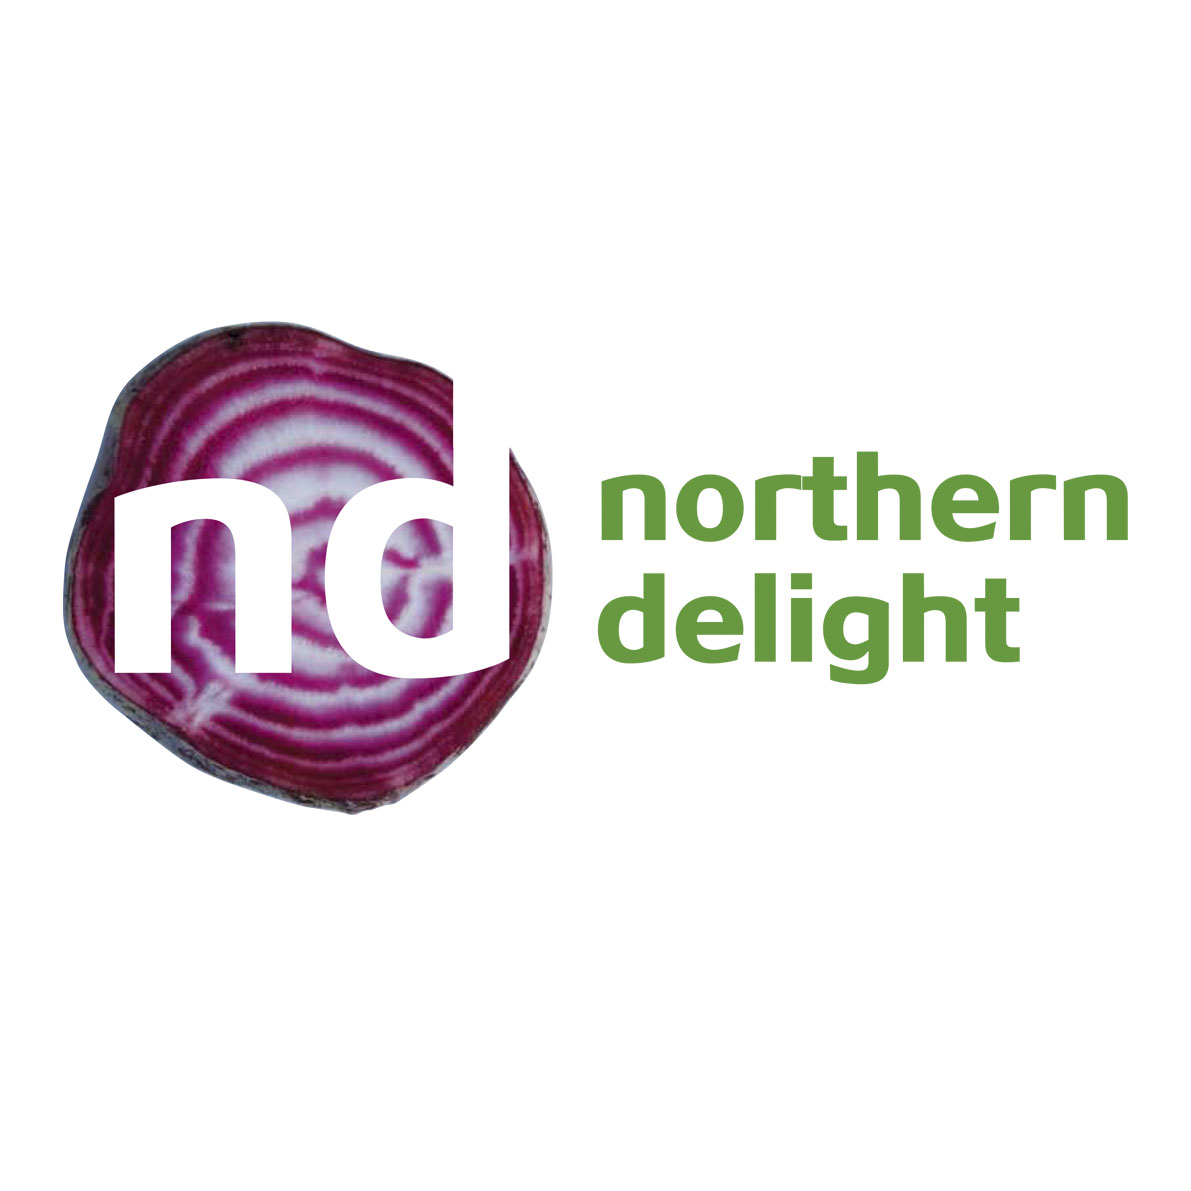 Northern delight-logo